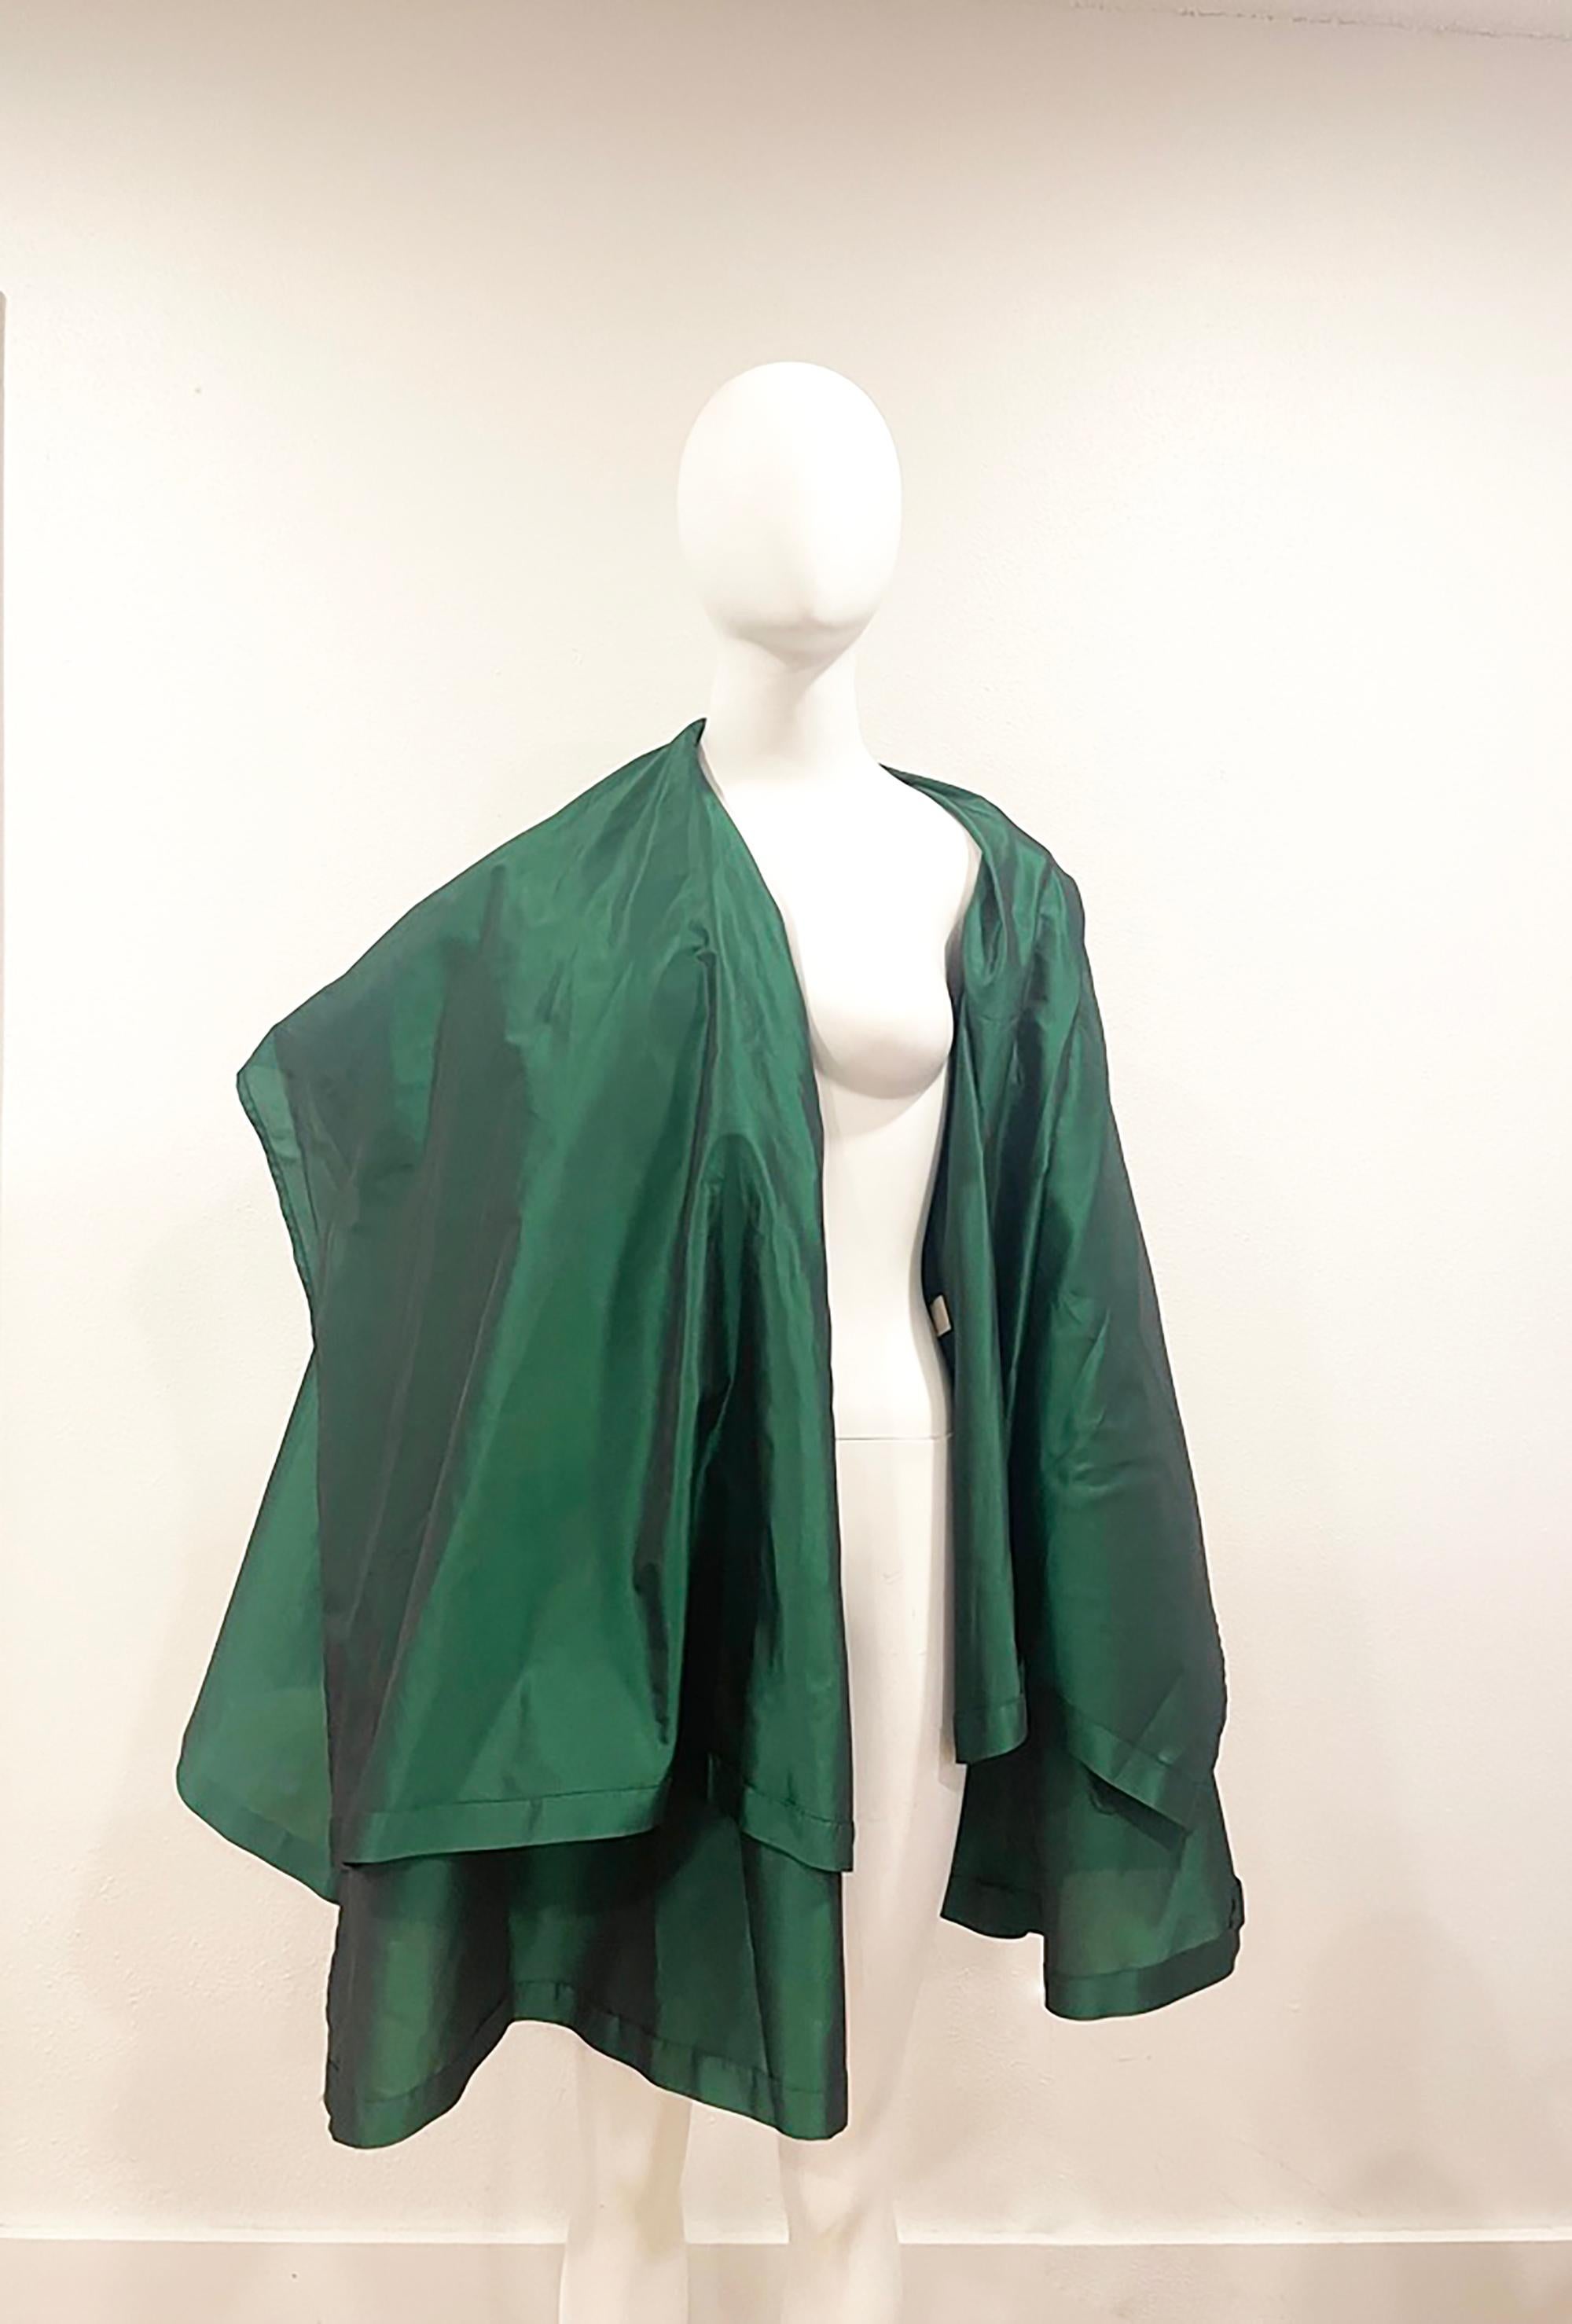 Women's 1991 DOLCE & GABBANA Emerald Green Satin Coat Dress For Sale